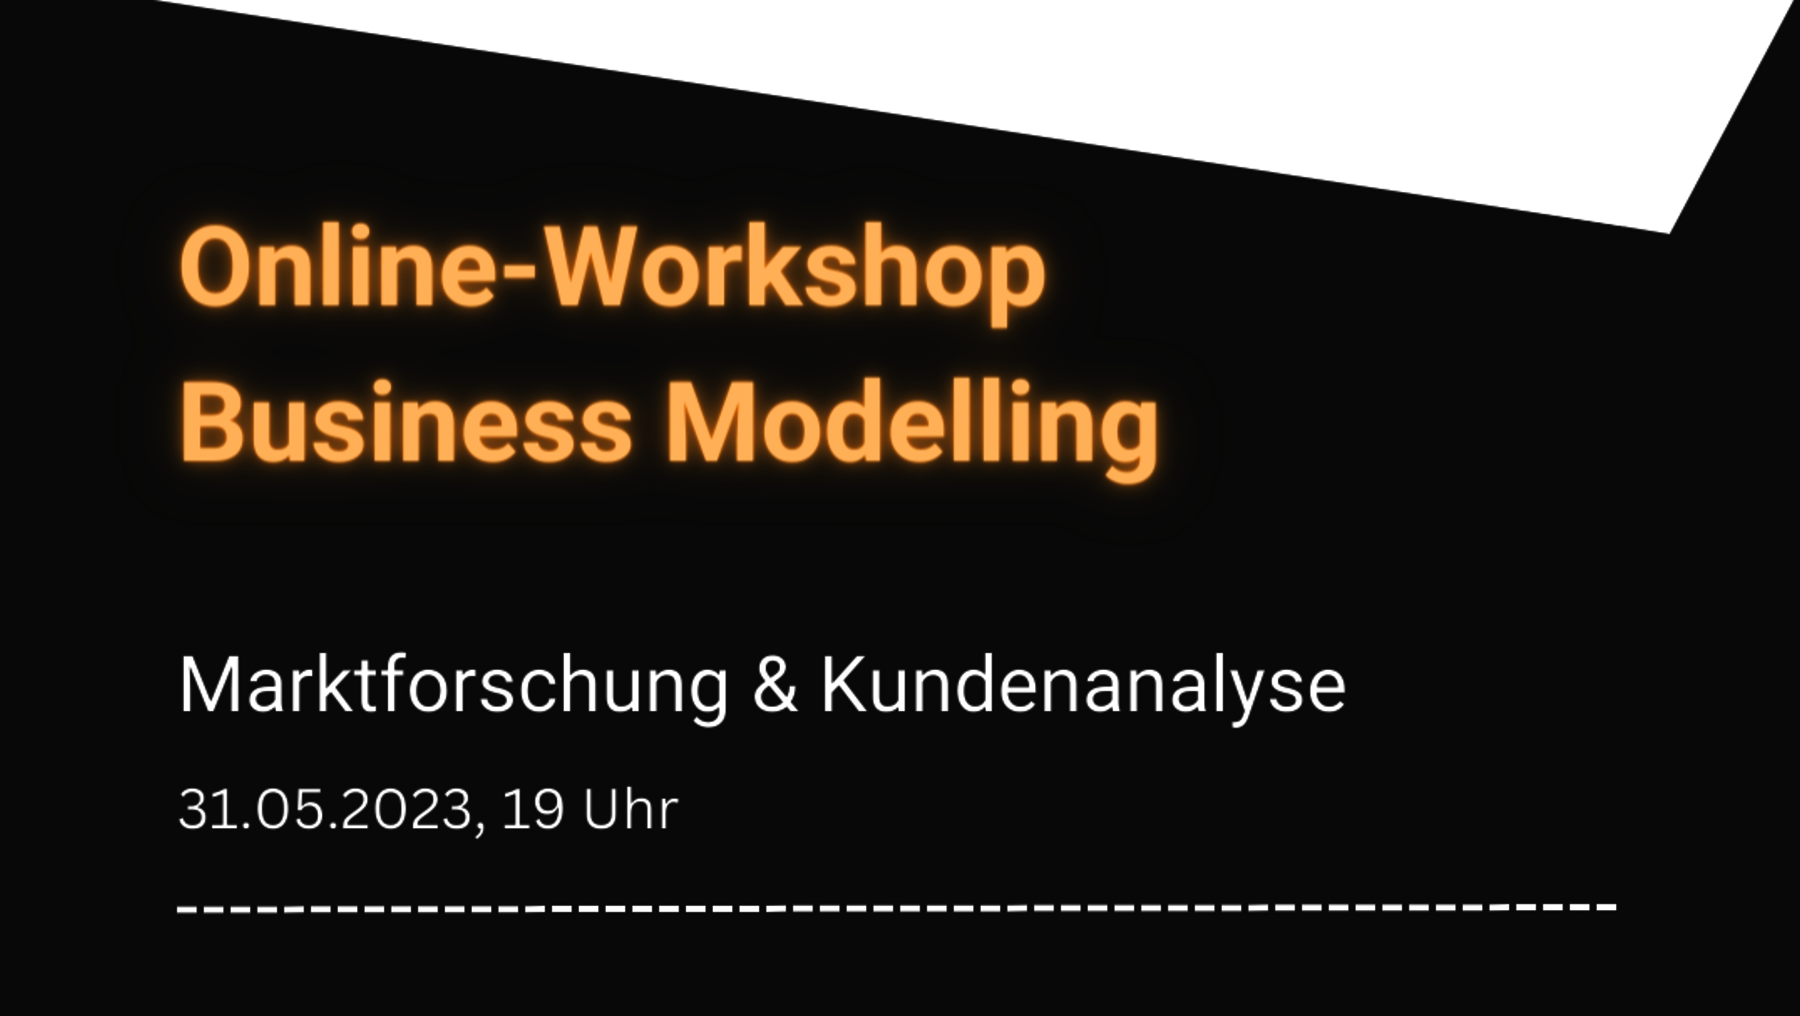 Online-Workshopreihe Business Modelling: Markforschung & Kundenanalyse